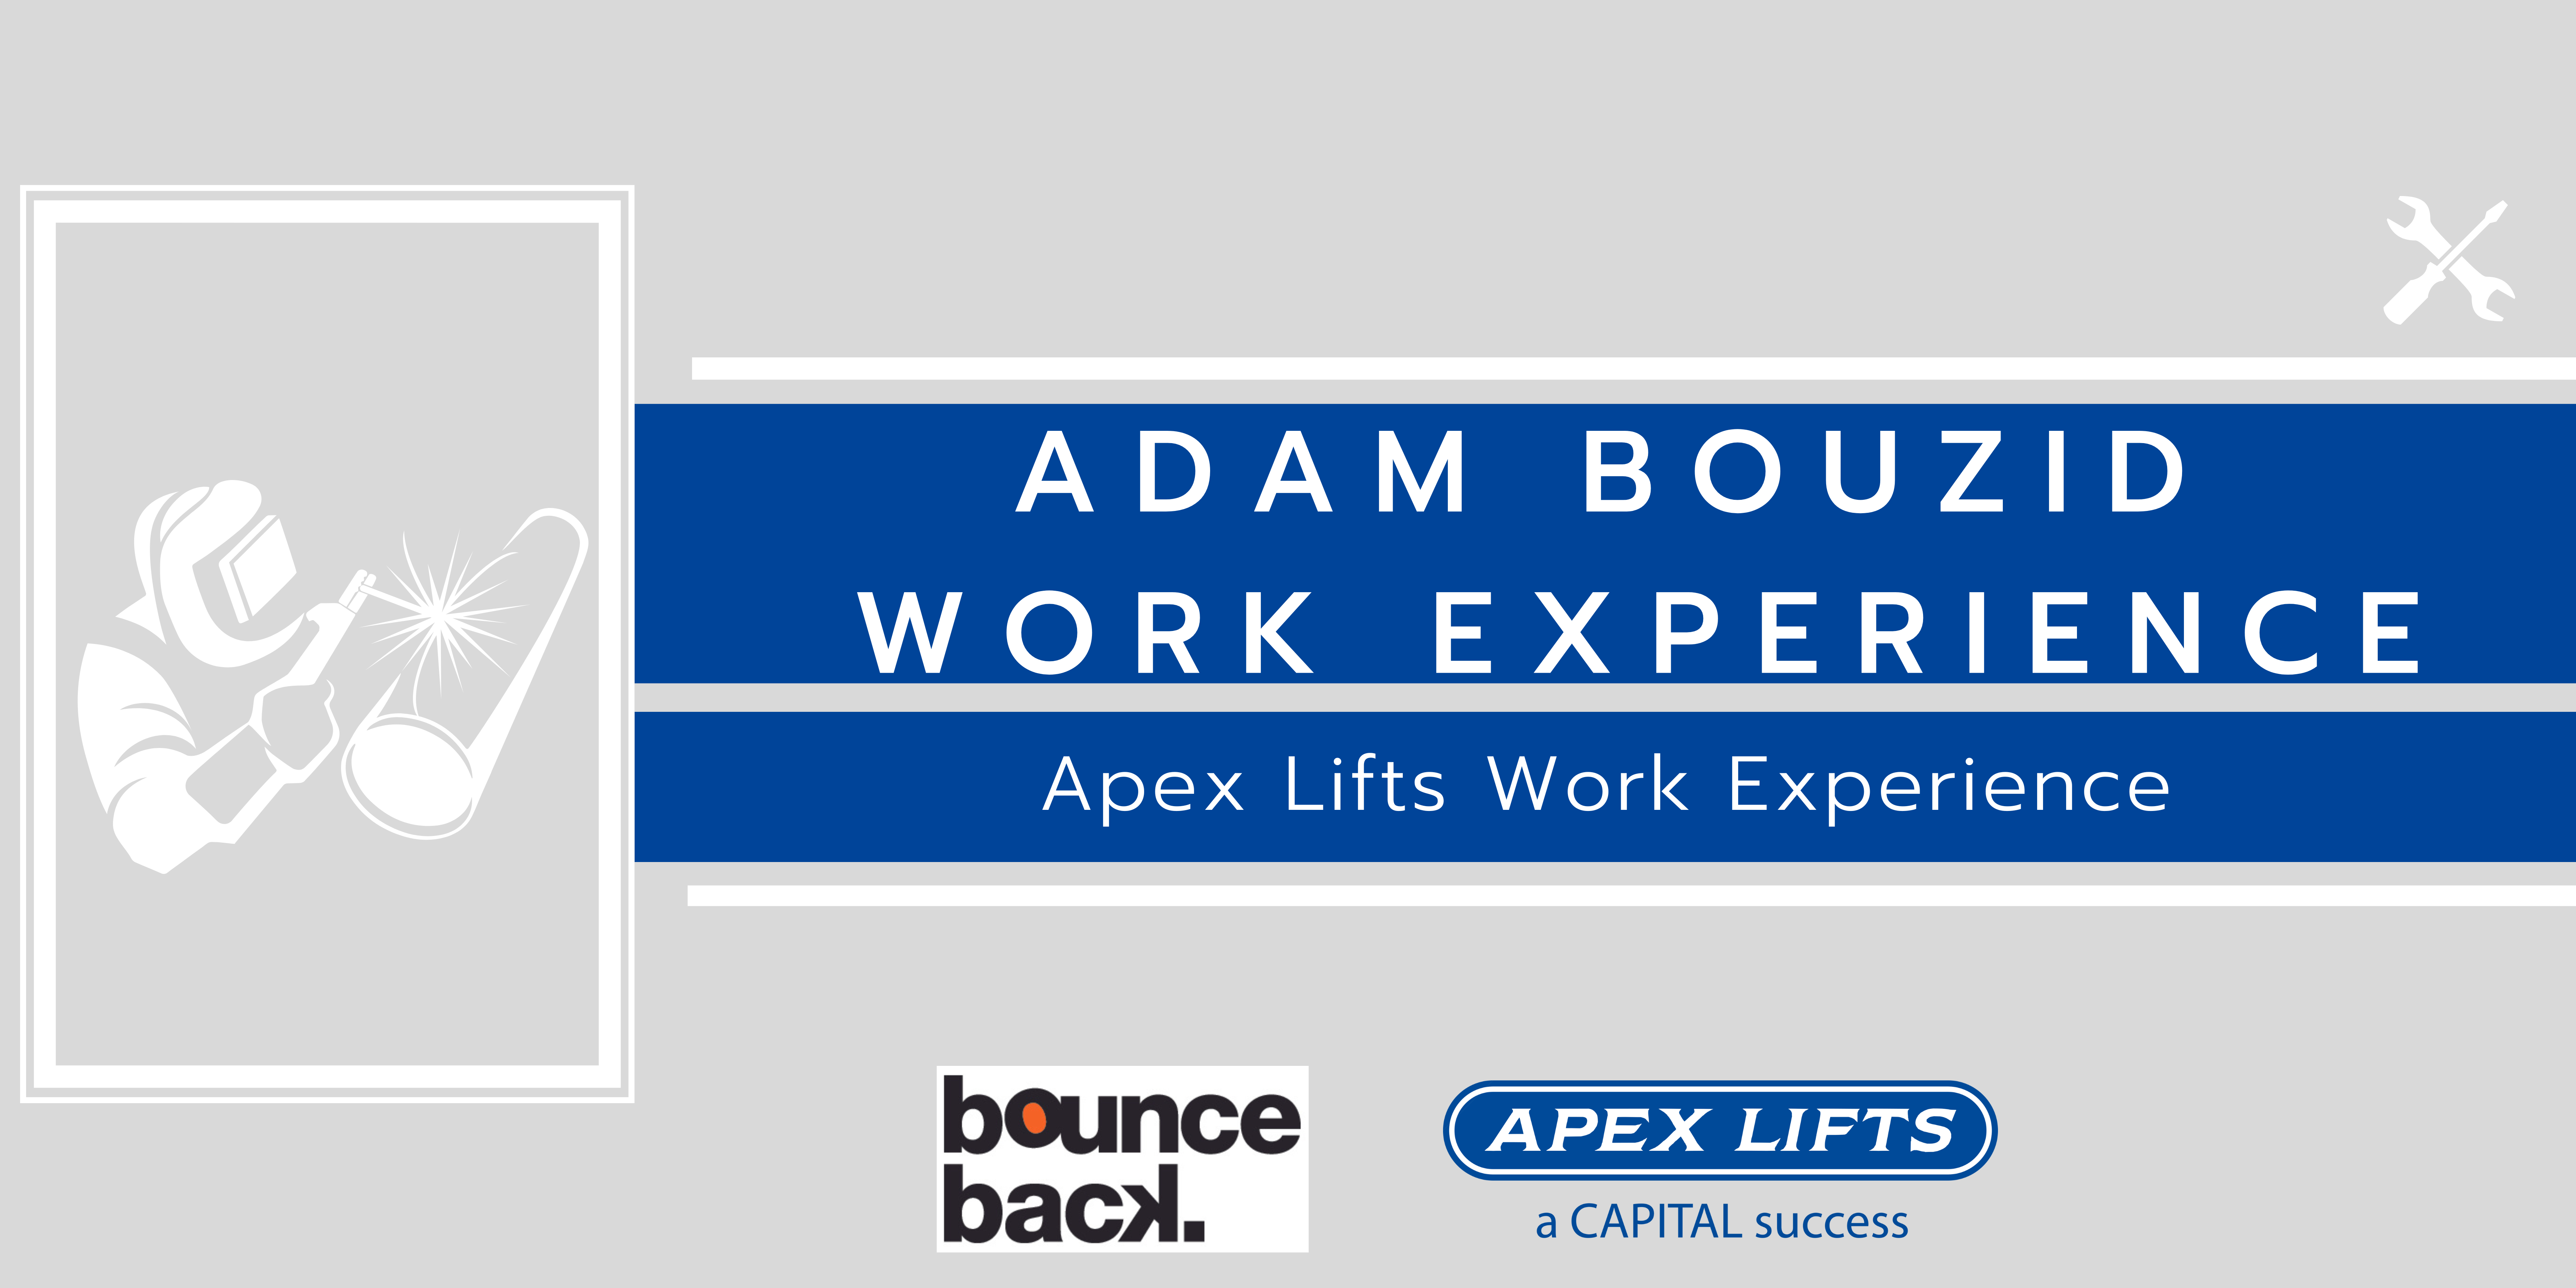 Meet Adam Bouzid, here for work experience